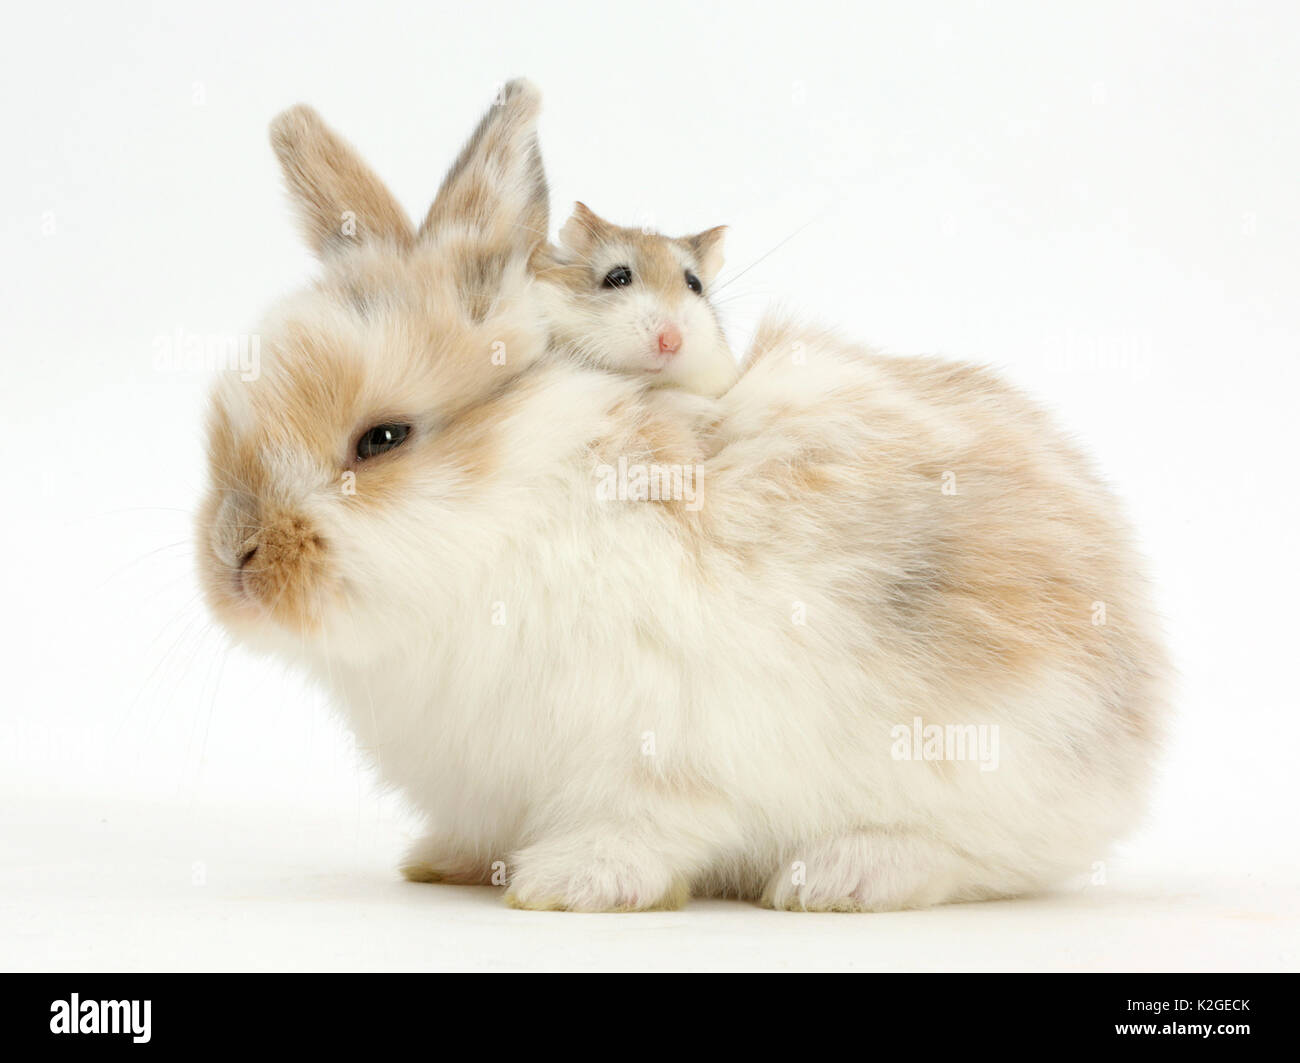 Young Rabbit with Roborovski hamster riding on back. Stock Photo